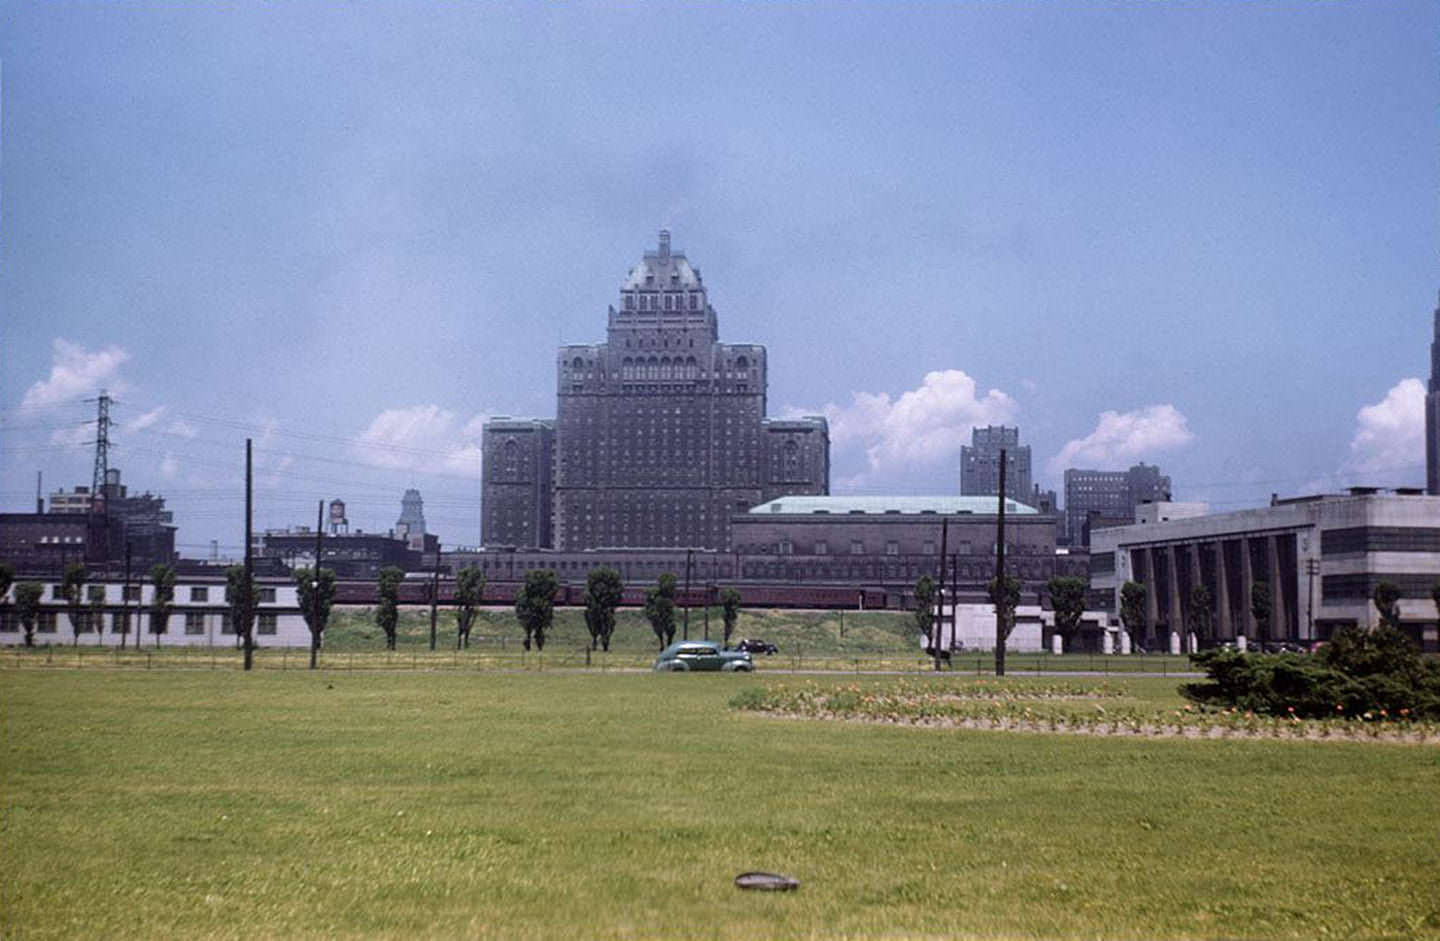 Toronto skyline from Queens Quay, June 23, 1946.